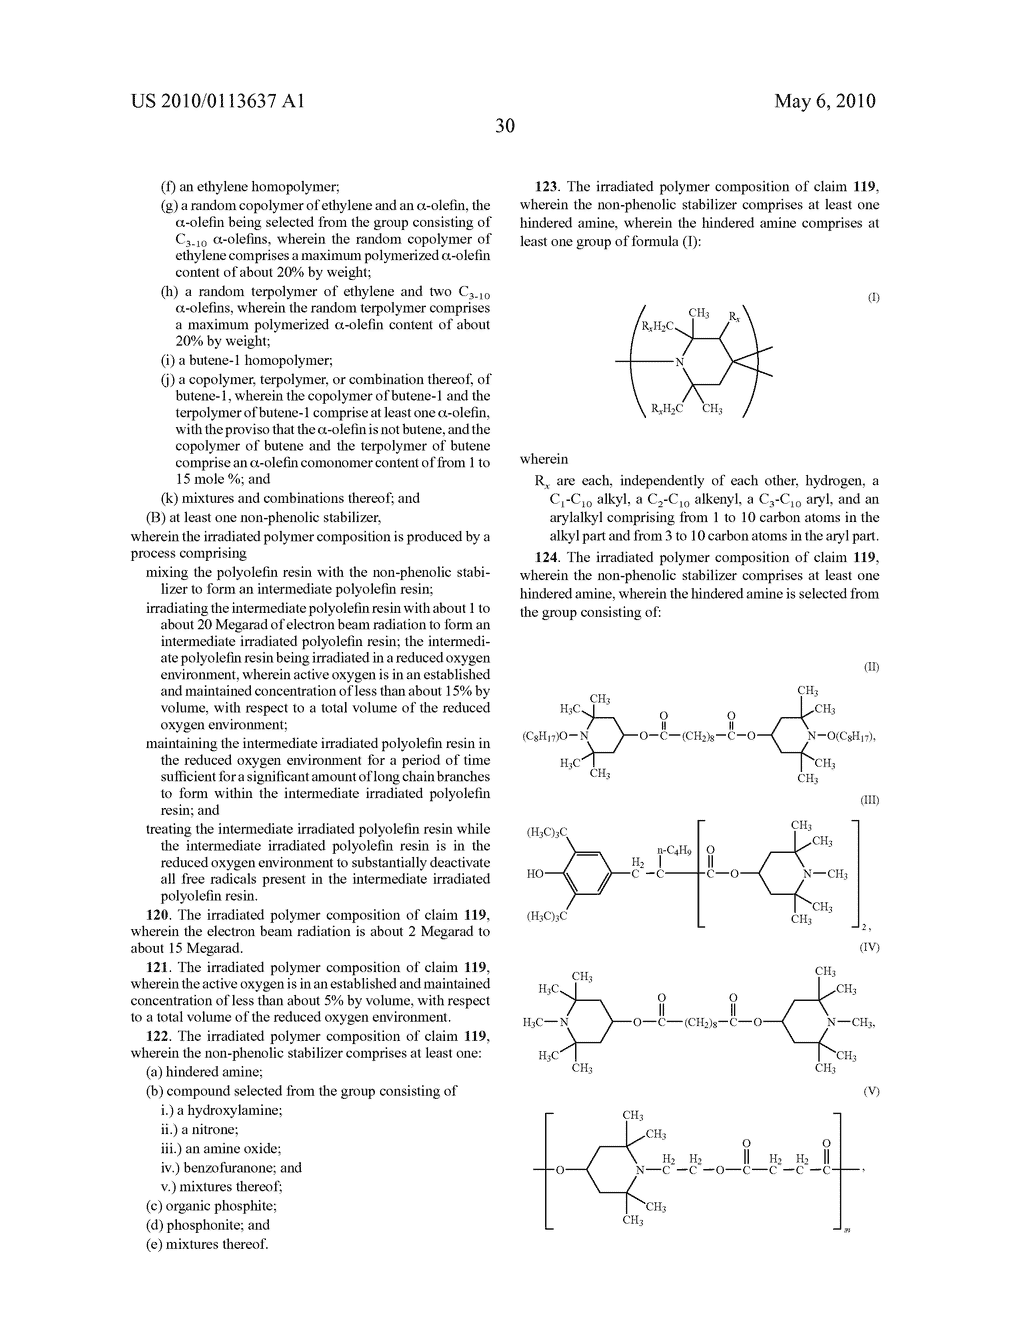 IRRADIATED POLYOLEFIN COMPOSITION COMPRISING A NON-PHENOLIC STABILIZER - diagram, schematic, and image 31